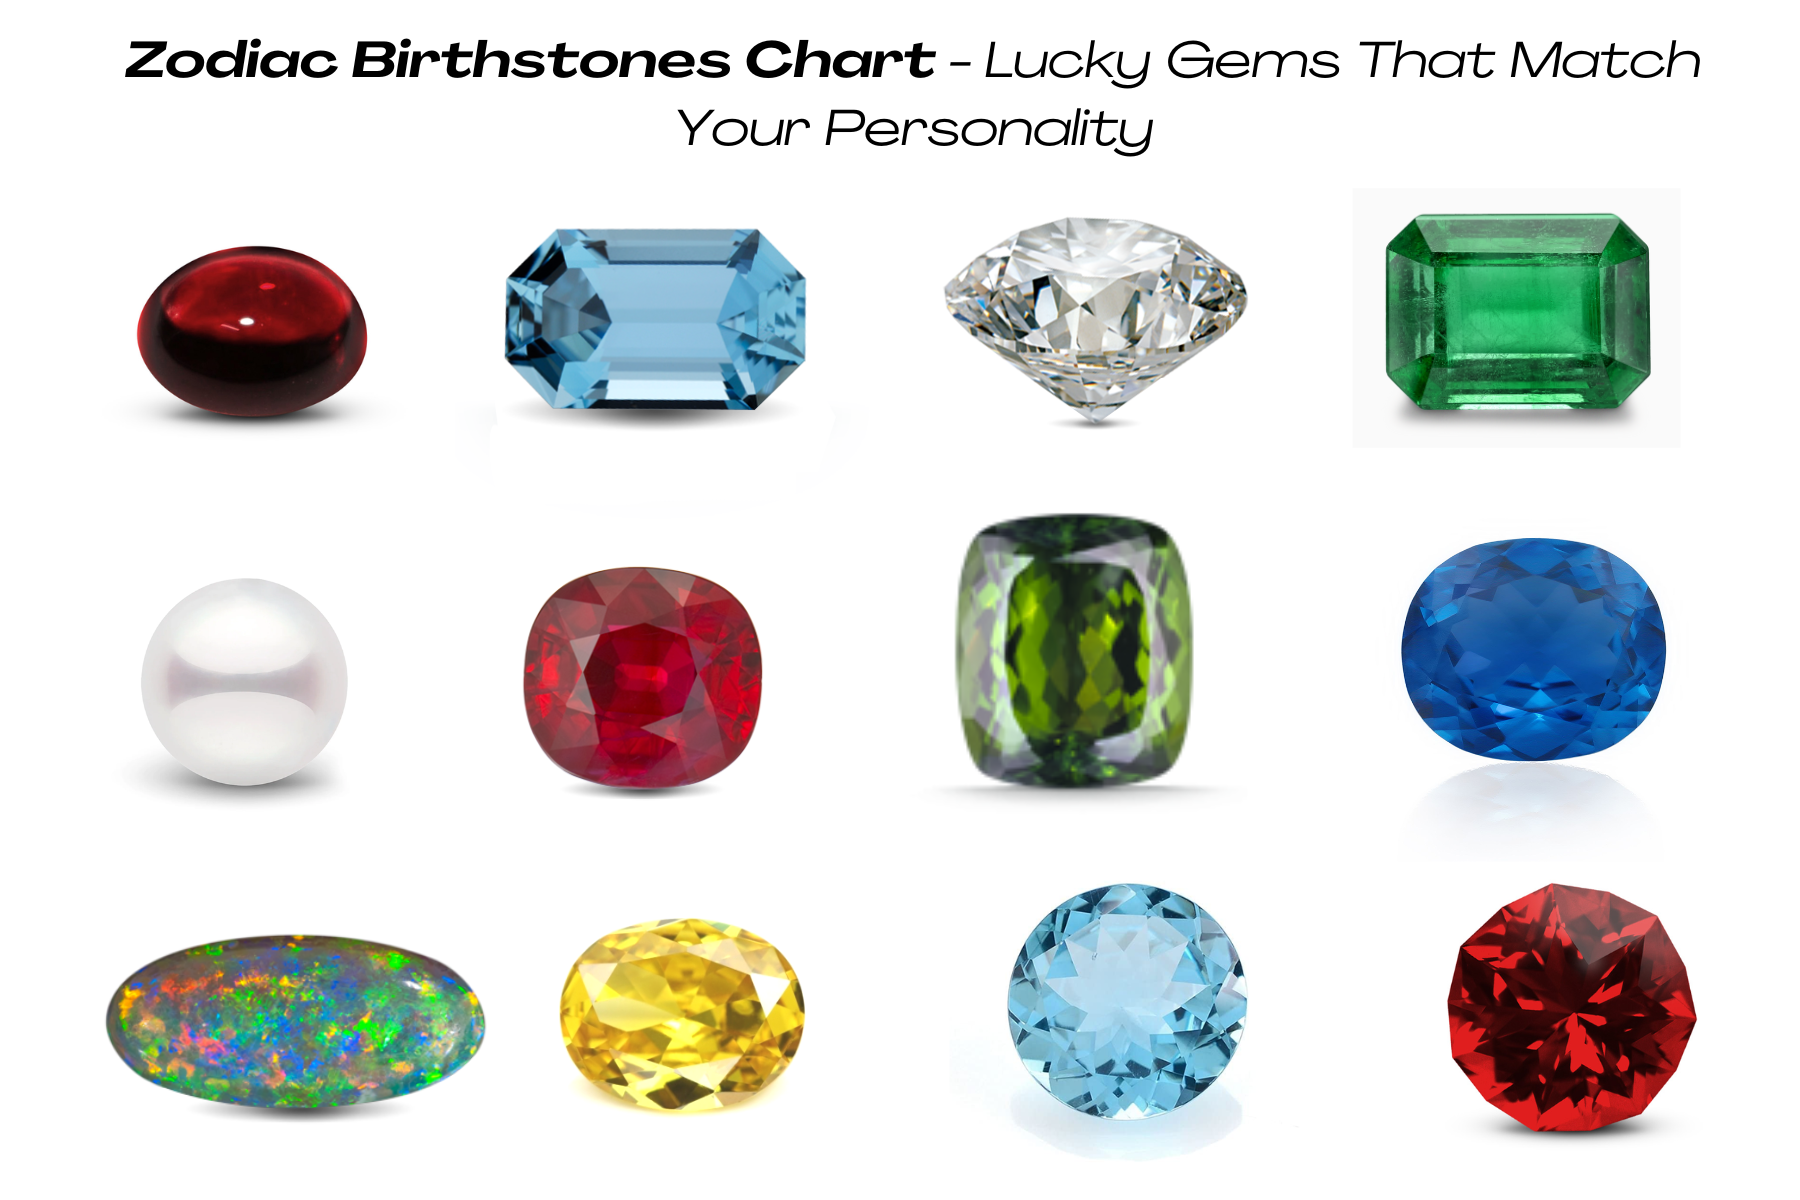 22 stones. Birthstone. 23 Февраля драгоценные камни. Birthstones by Zodiac sign.